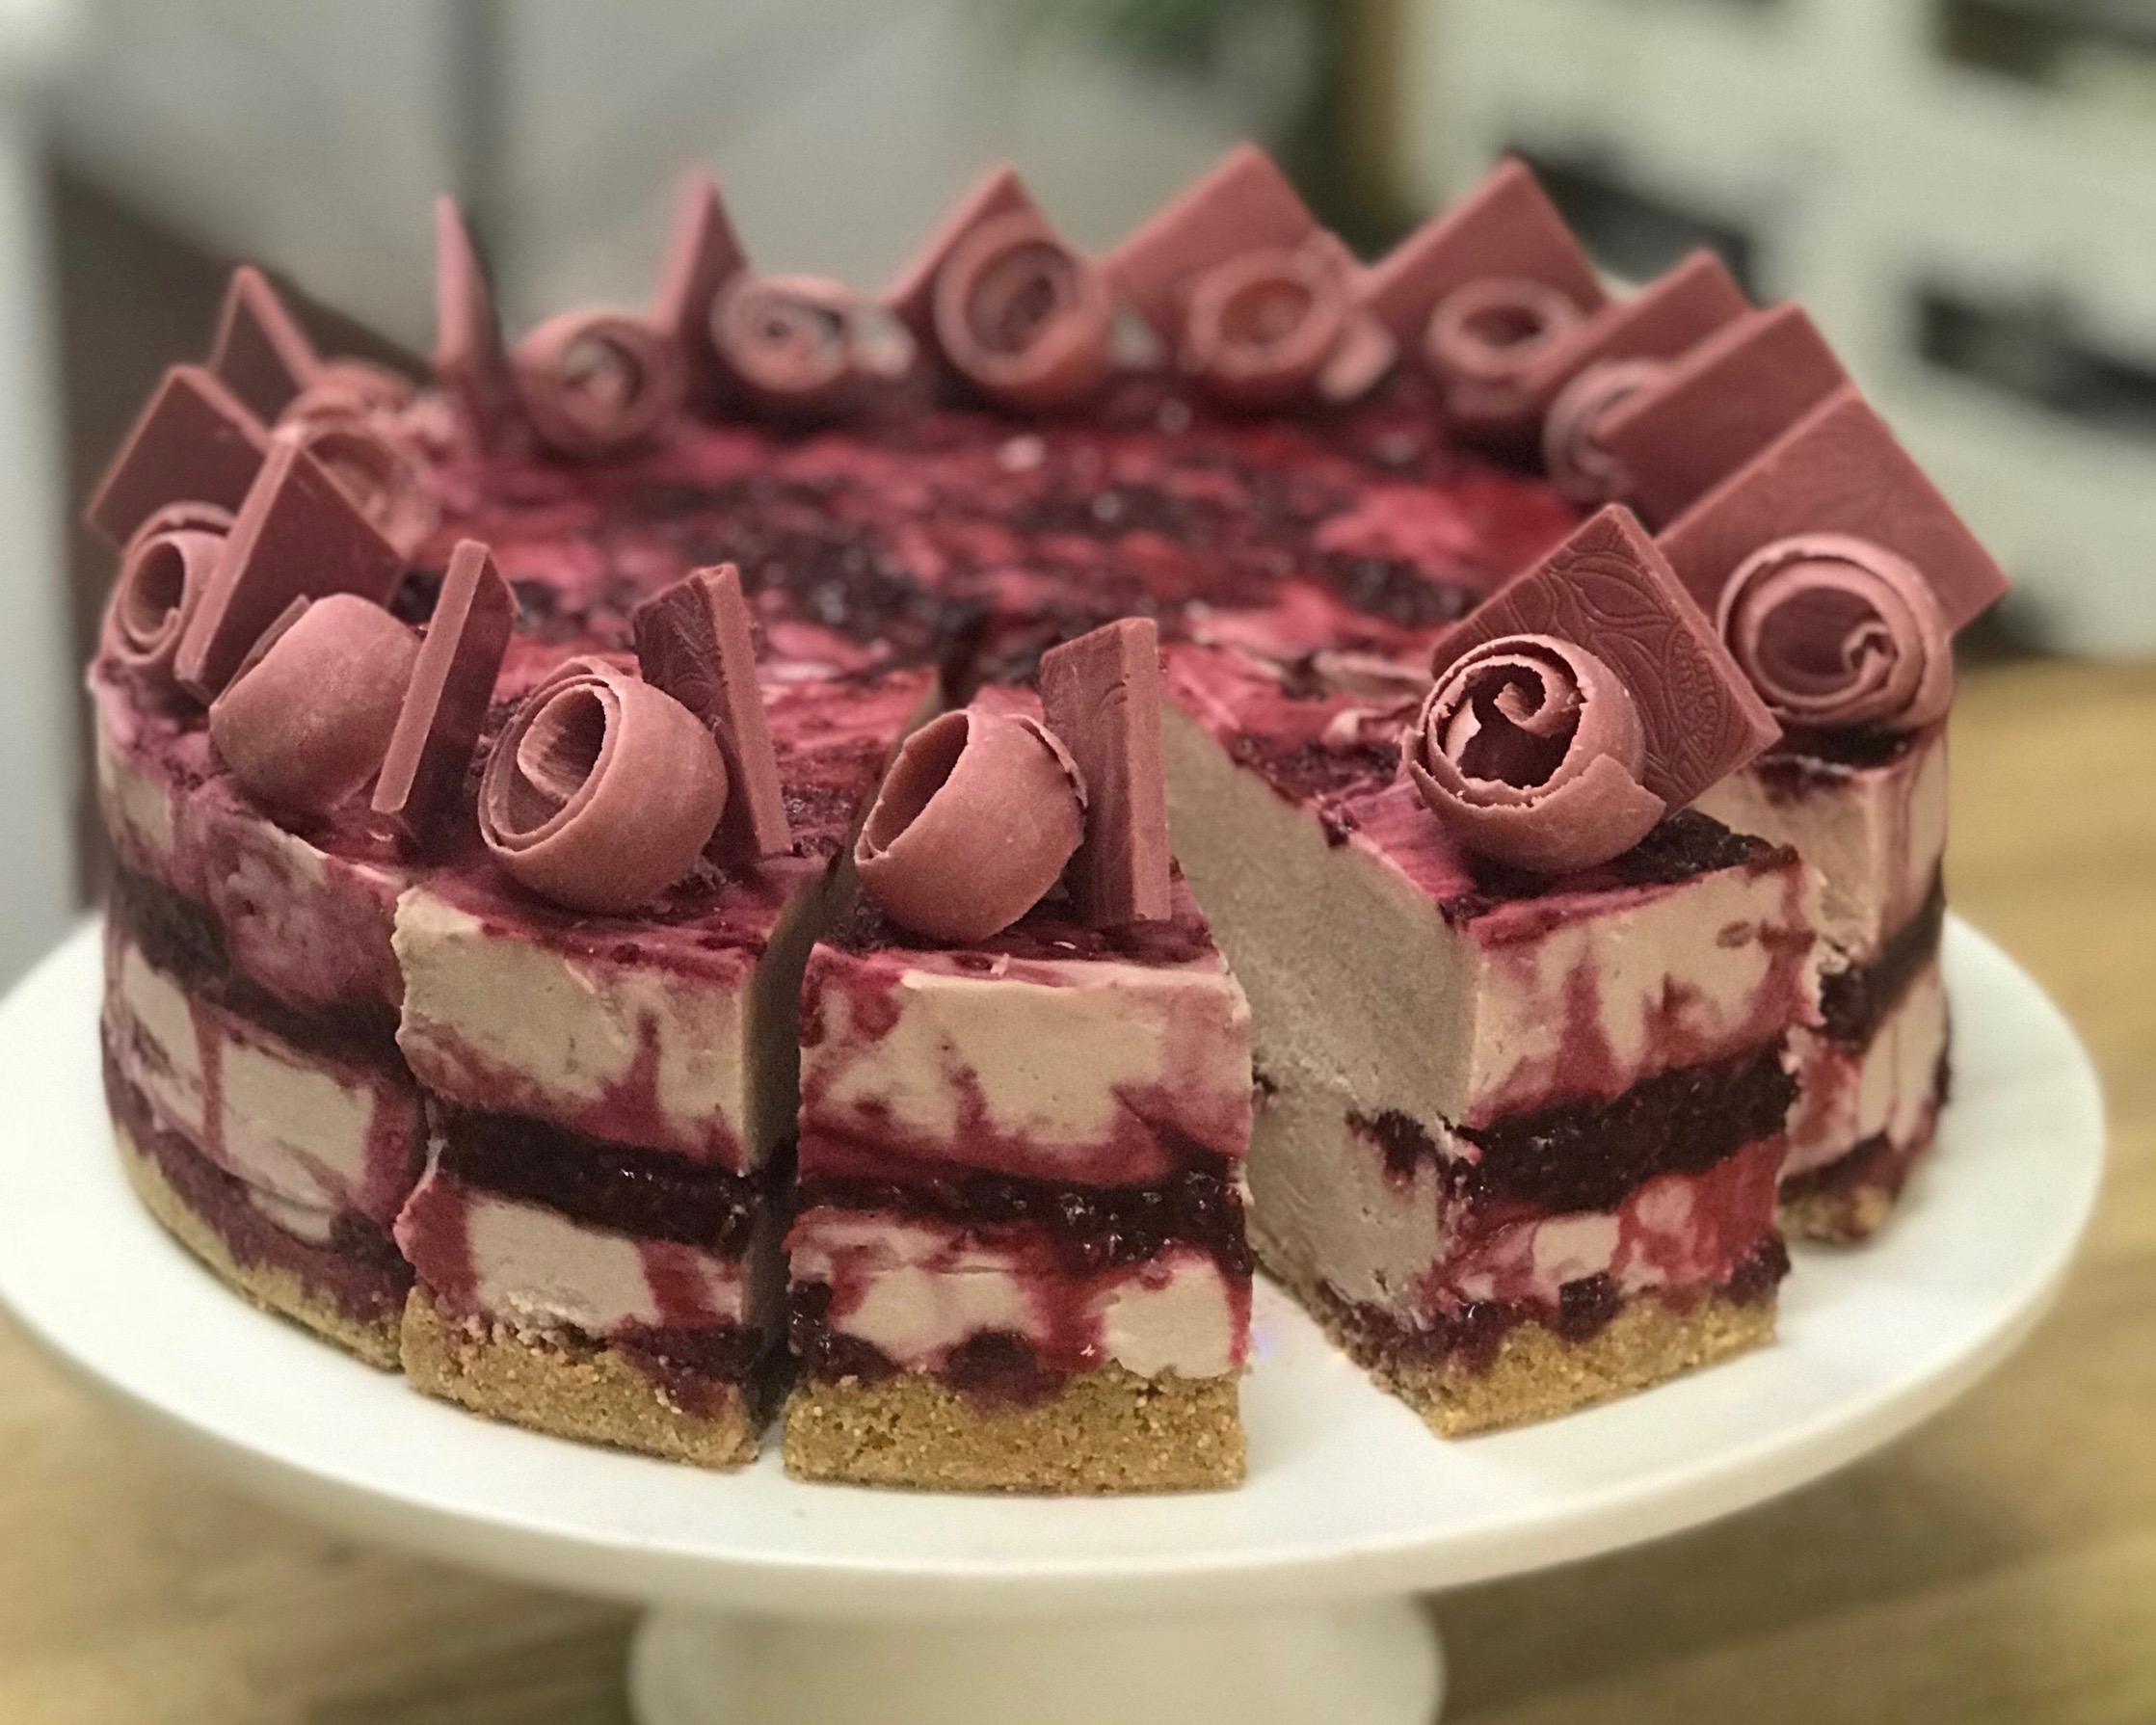 Foodie Friday: Ruby chocolate and raspberry cheesecake - The Interiors Addi...